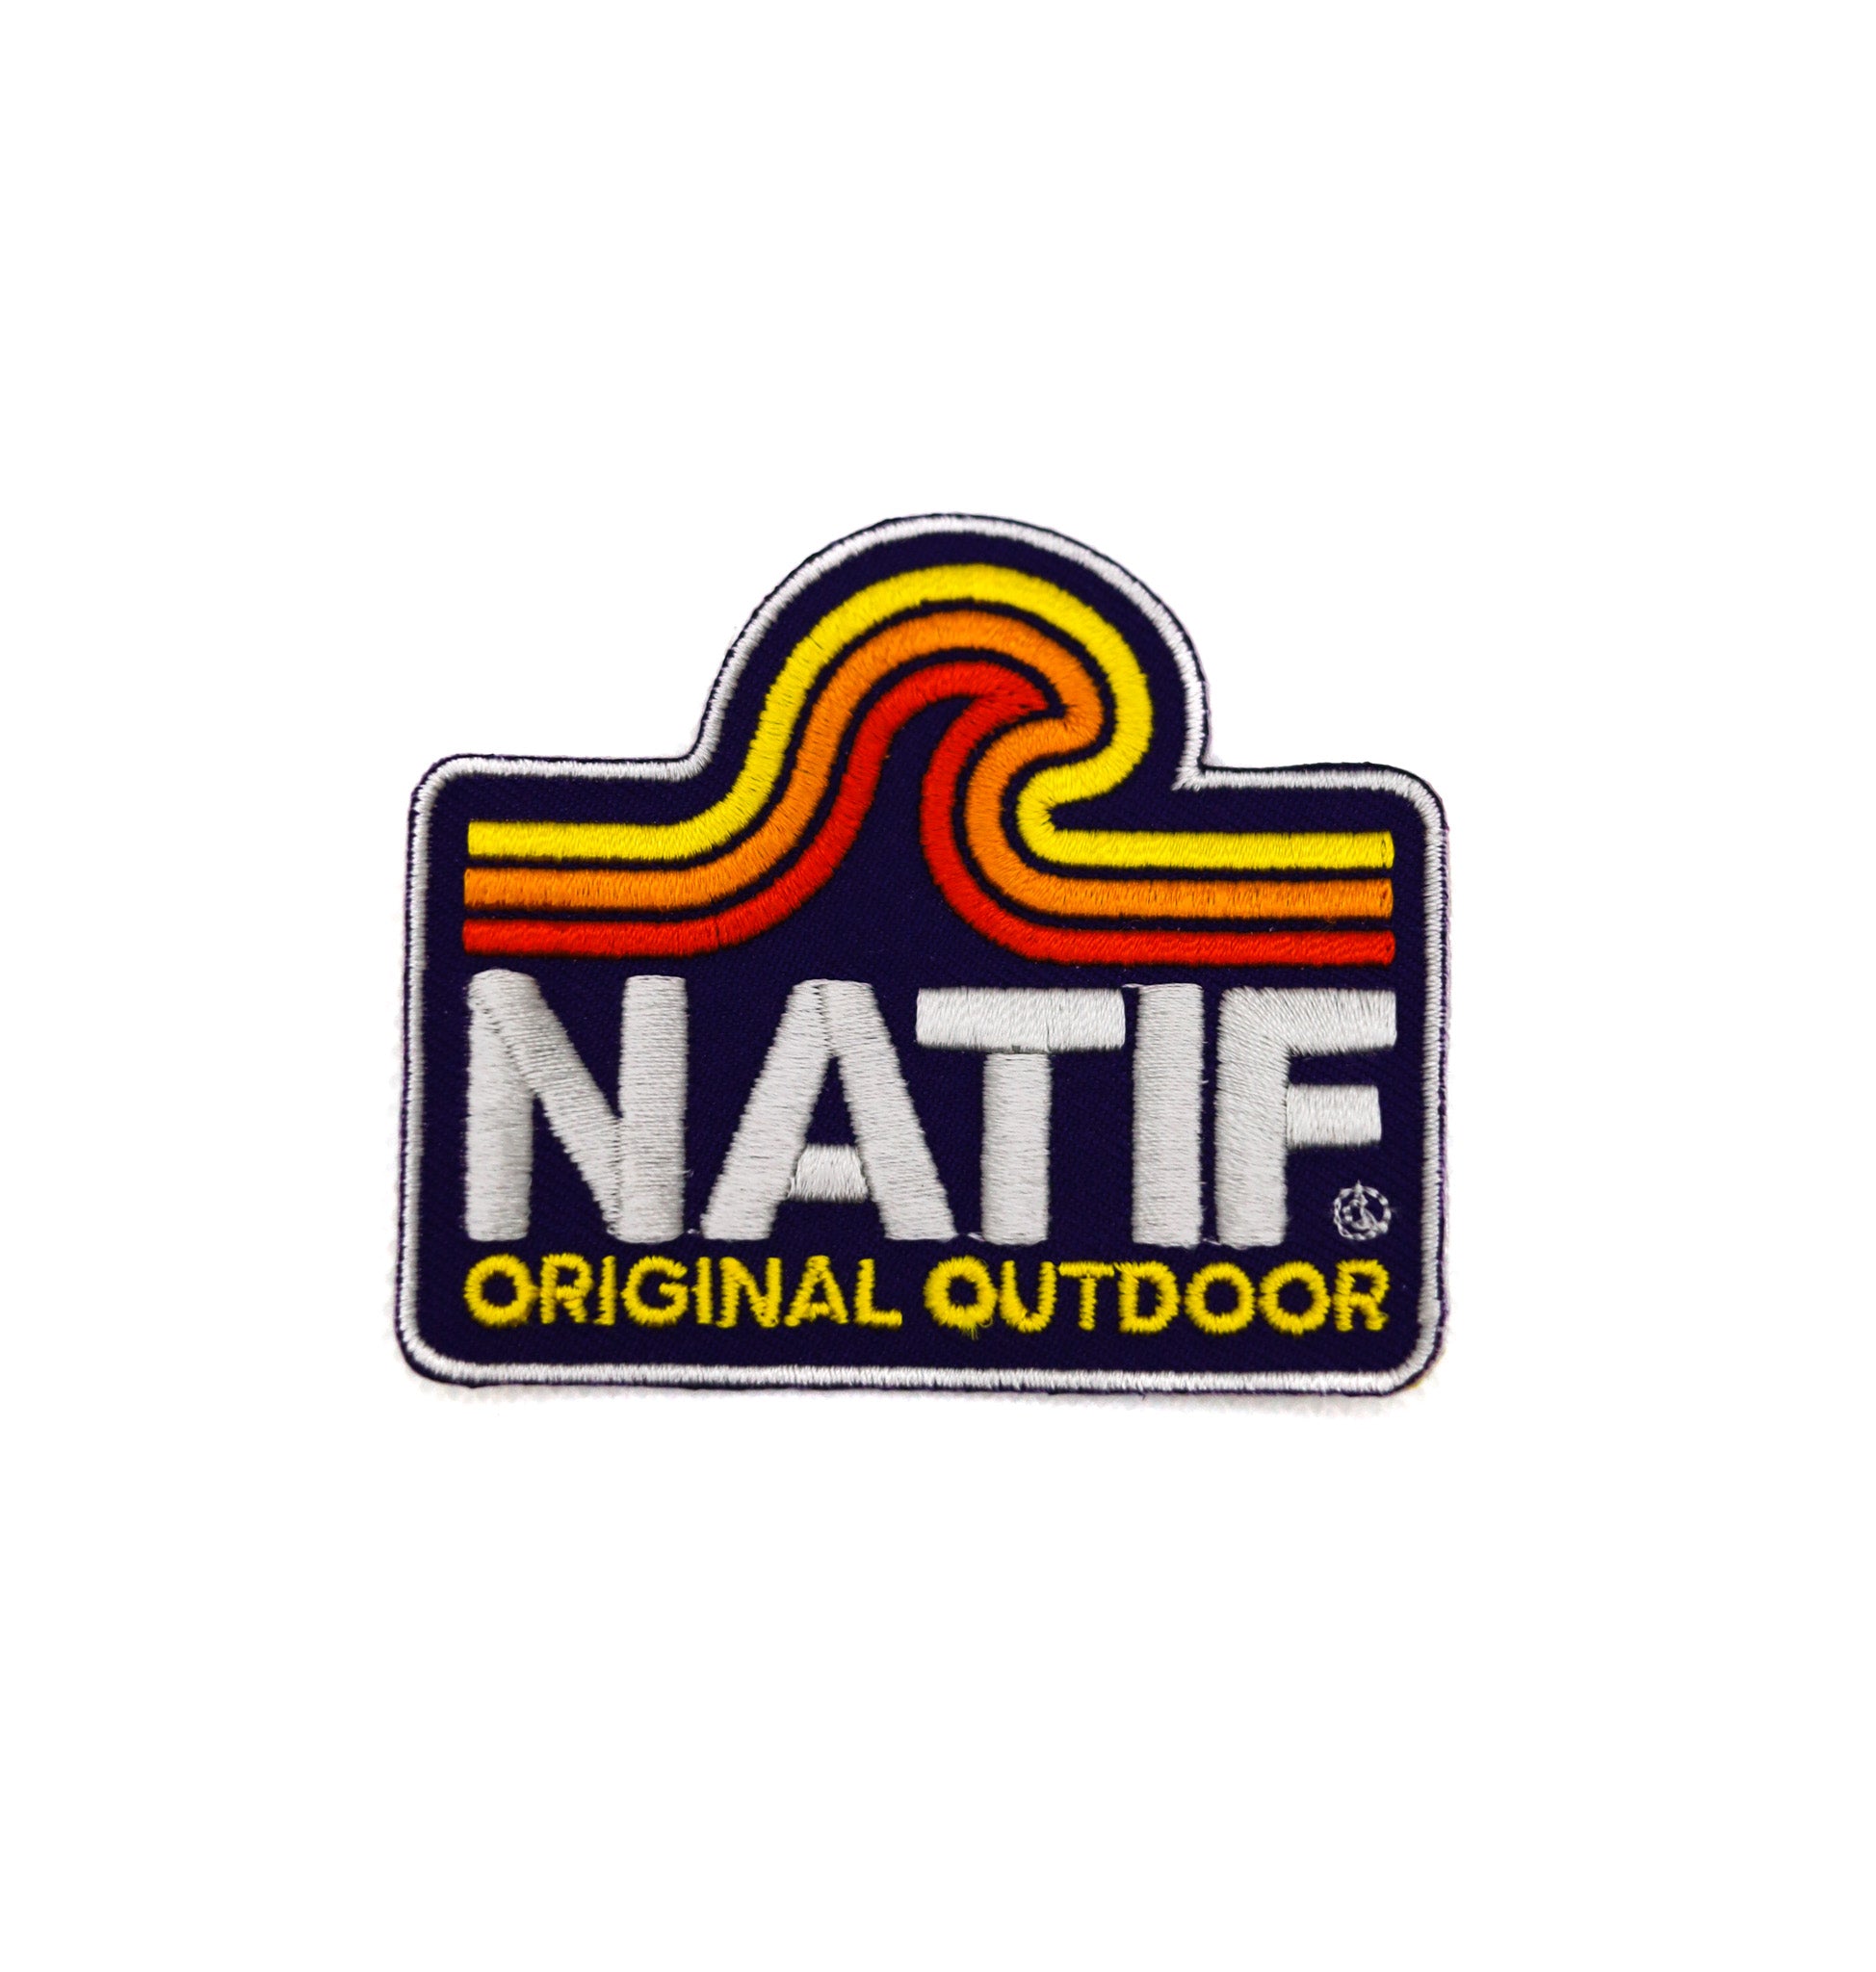 Patch Natif Originial Outdoor